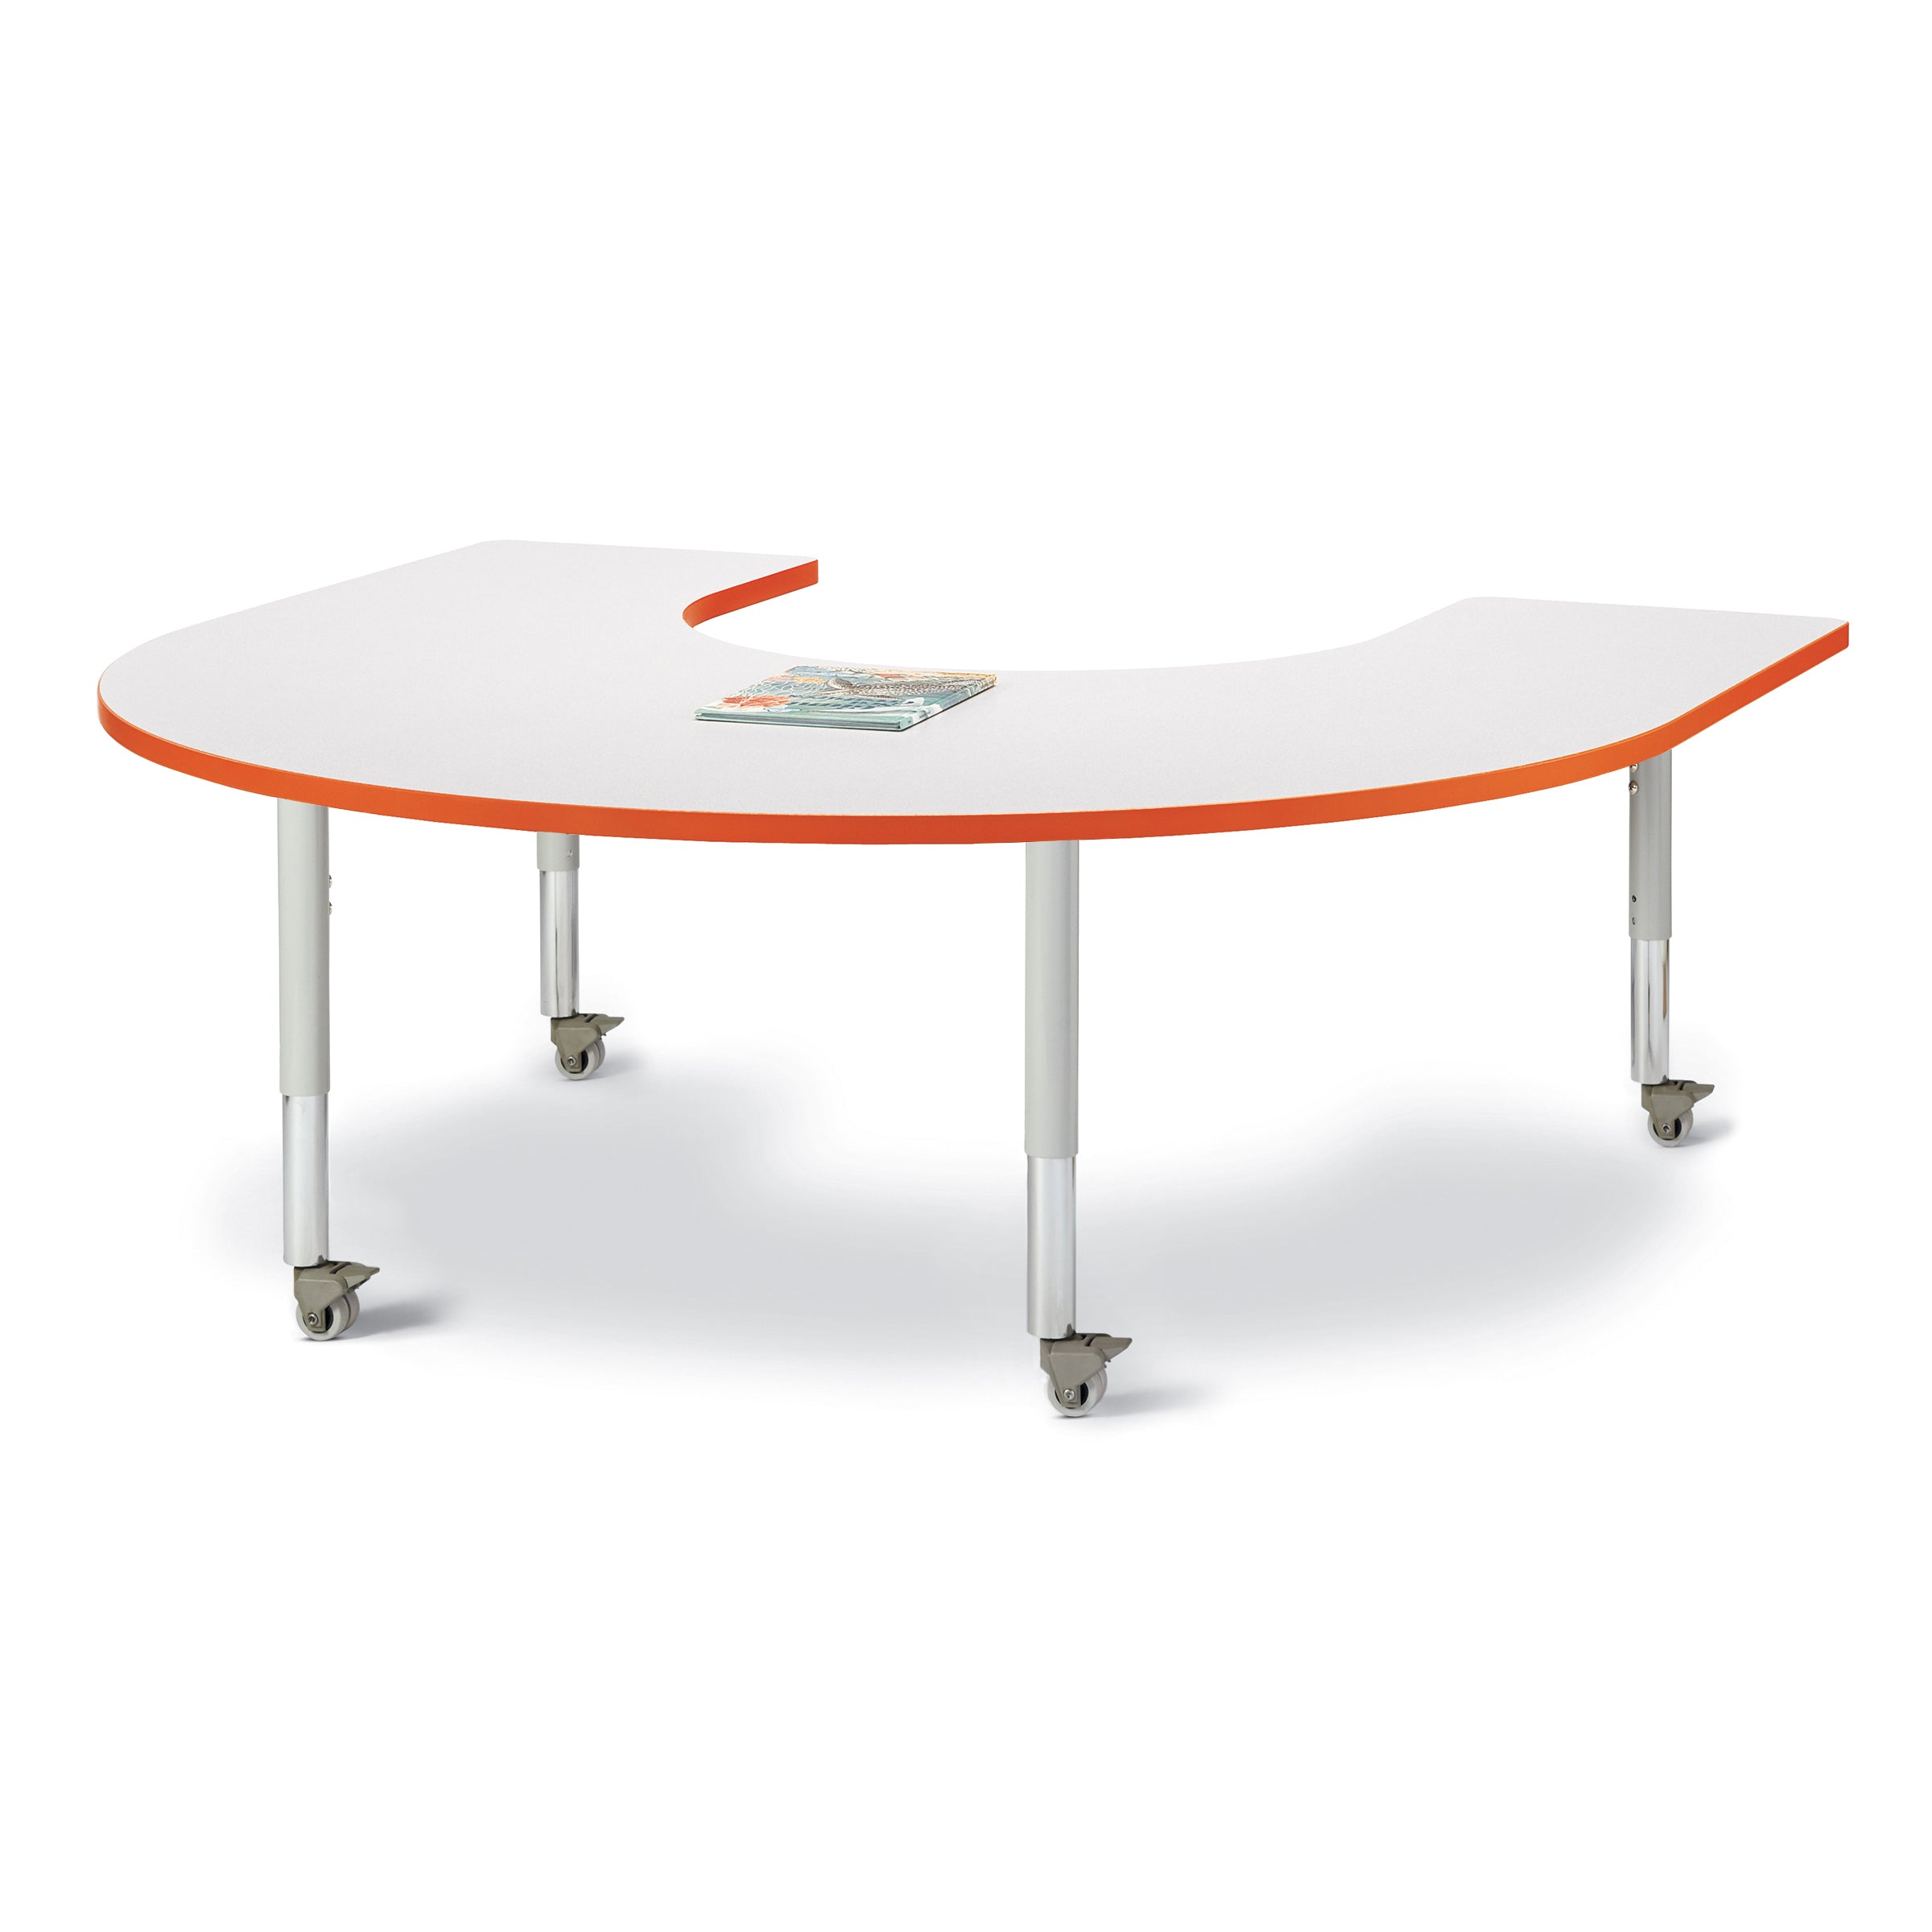 6445JCM114, Berries Horseshoe Activity Table - 66" X 60", Mobile - Freckled Gray/Orange/Gray